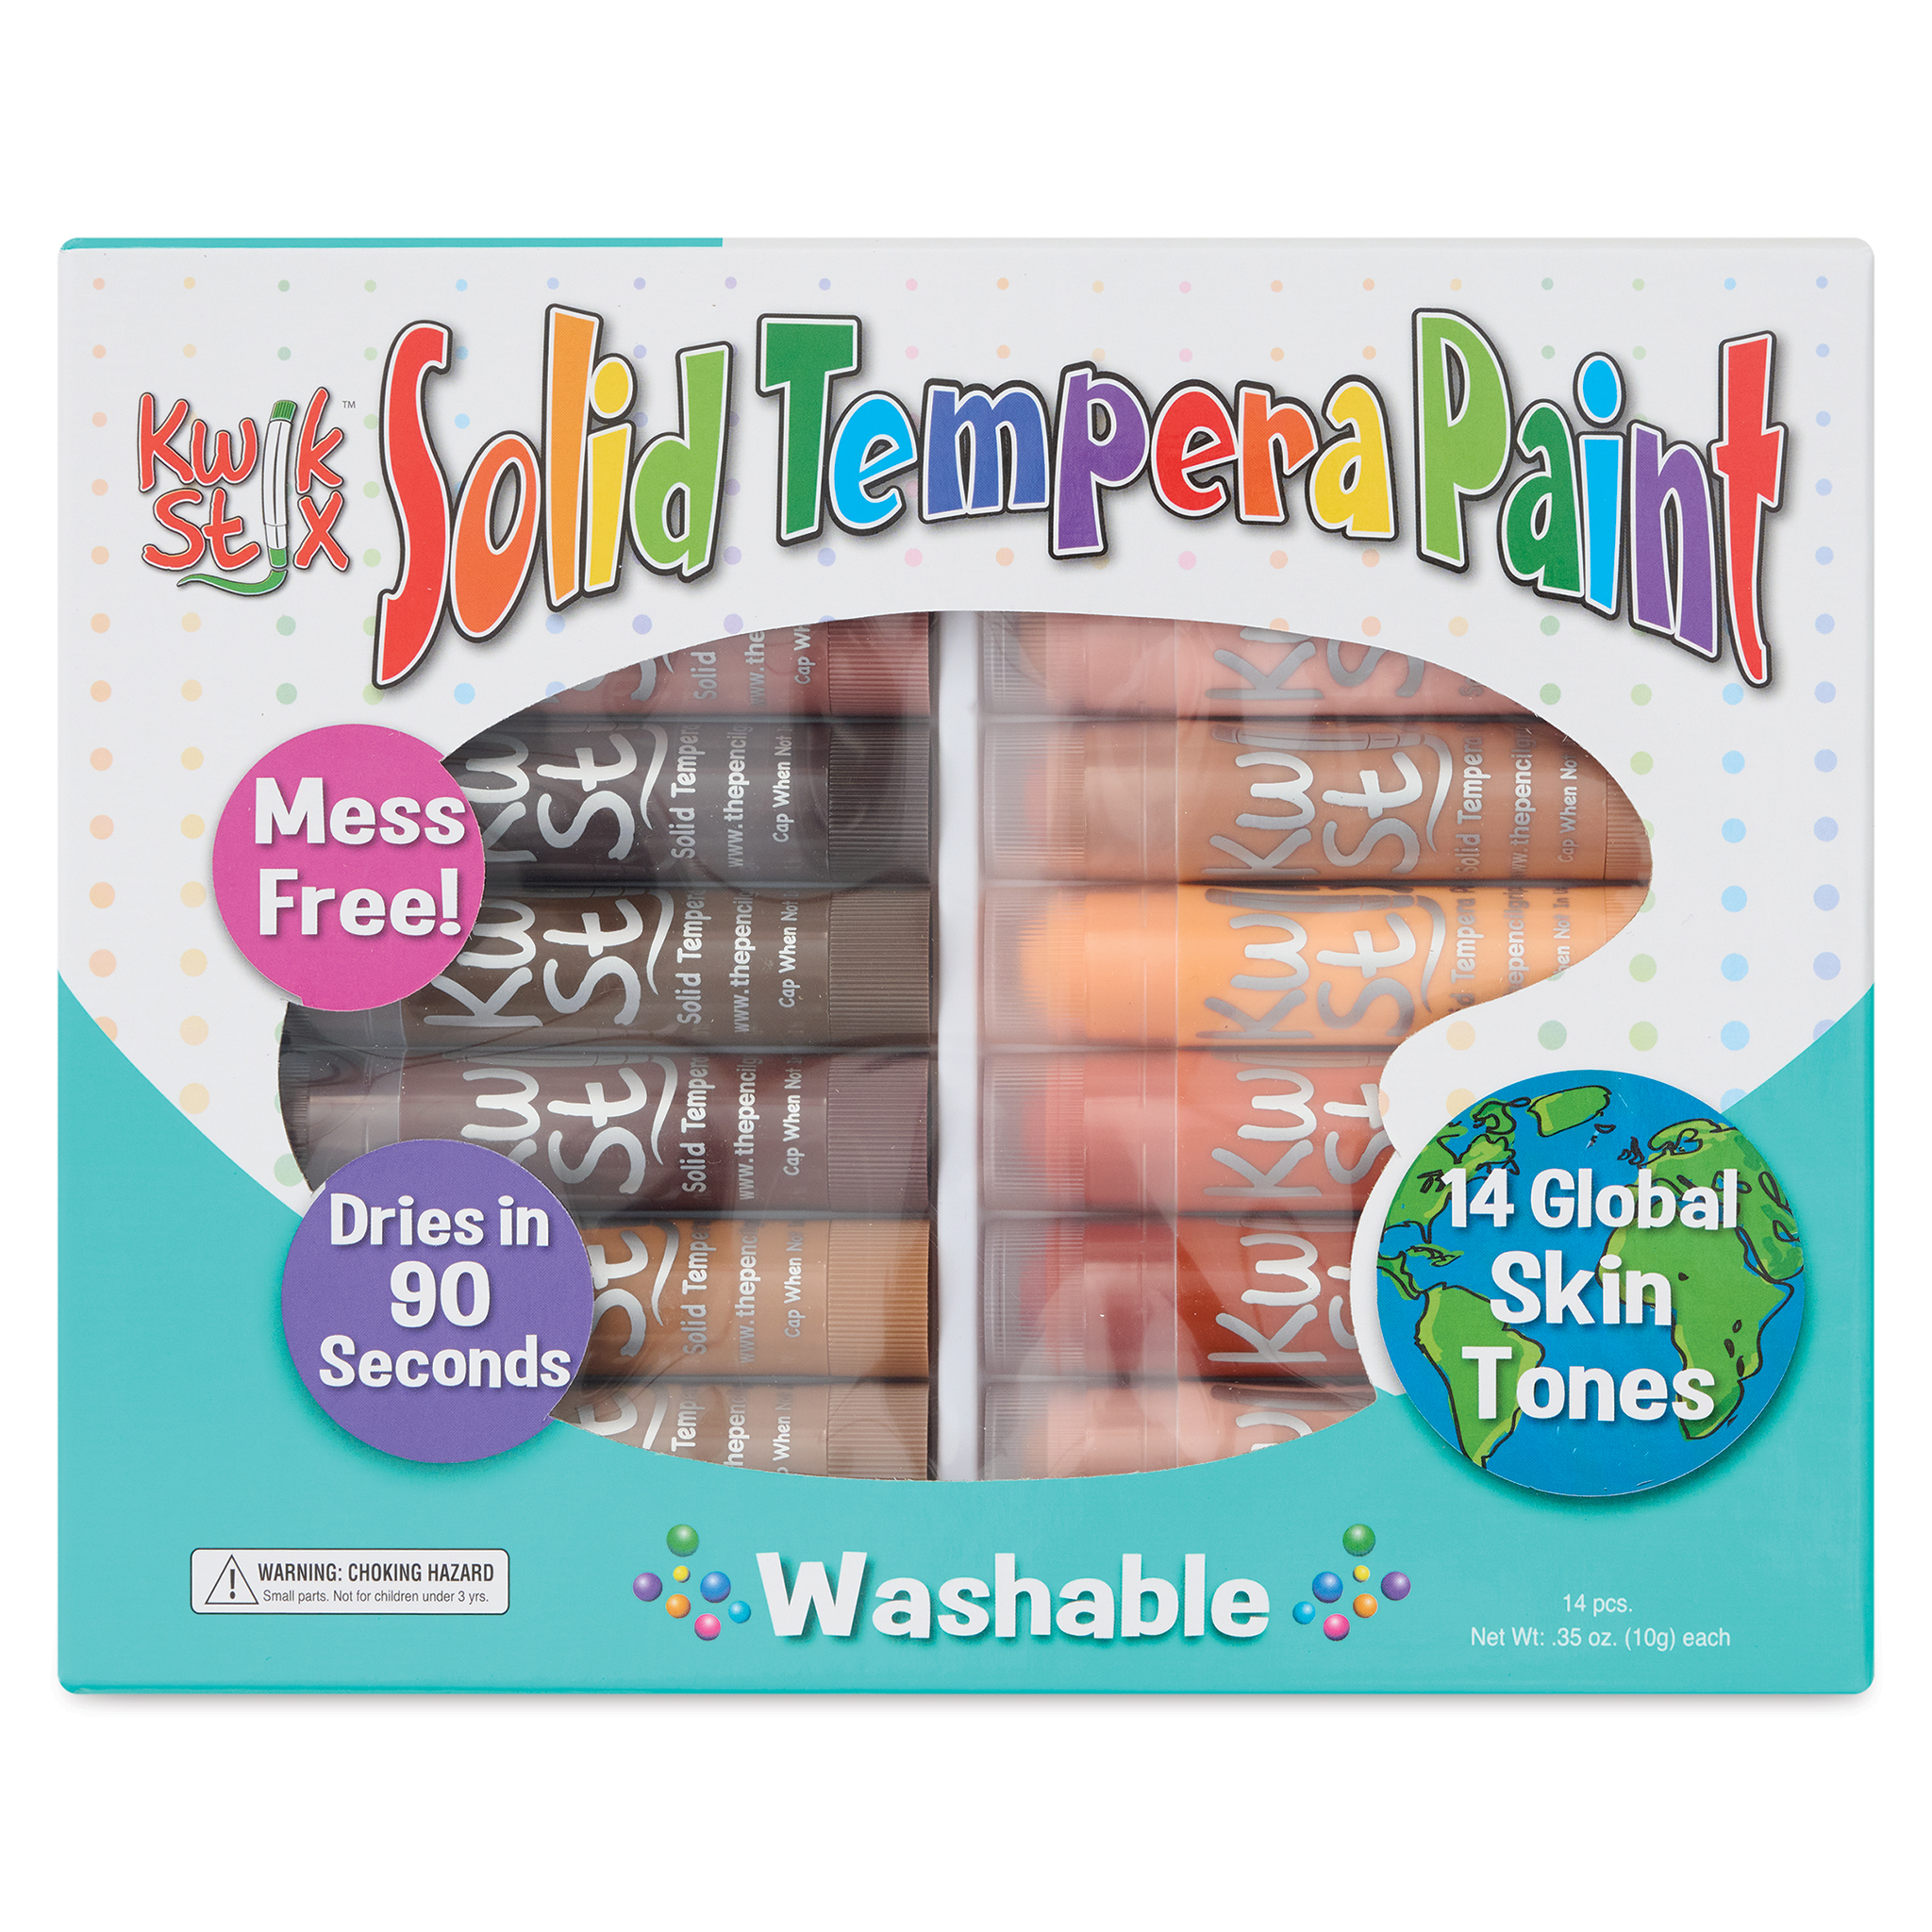 Kwik Stix™ Solid Tempera Paint Sticks, Primary Colors, 6 Per Pack, 6 Packs